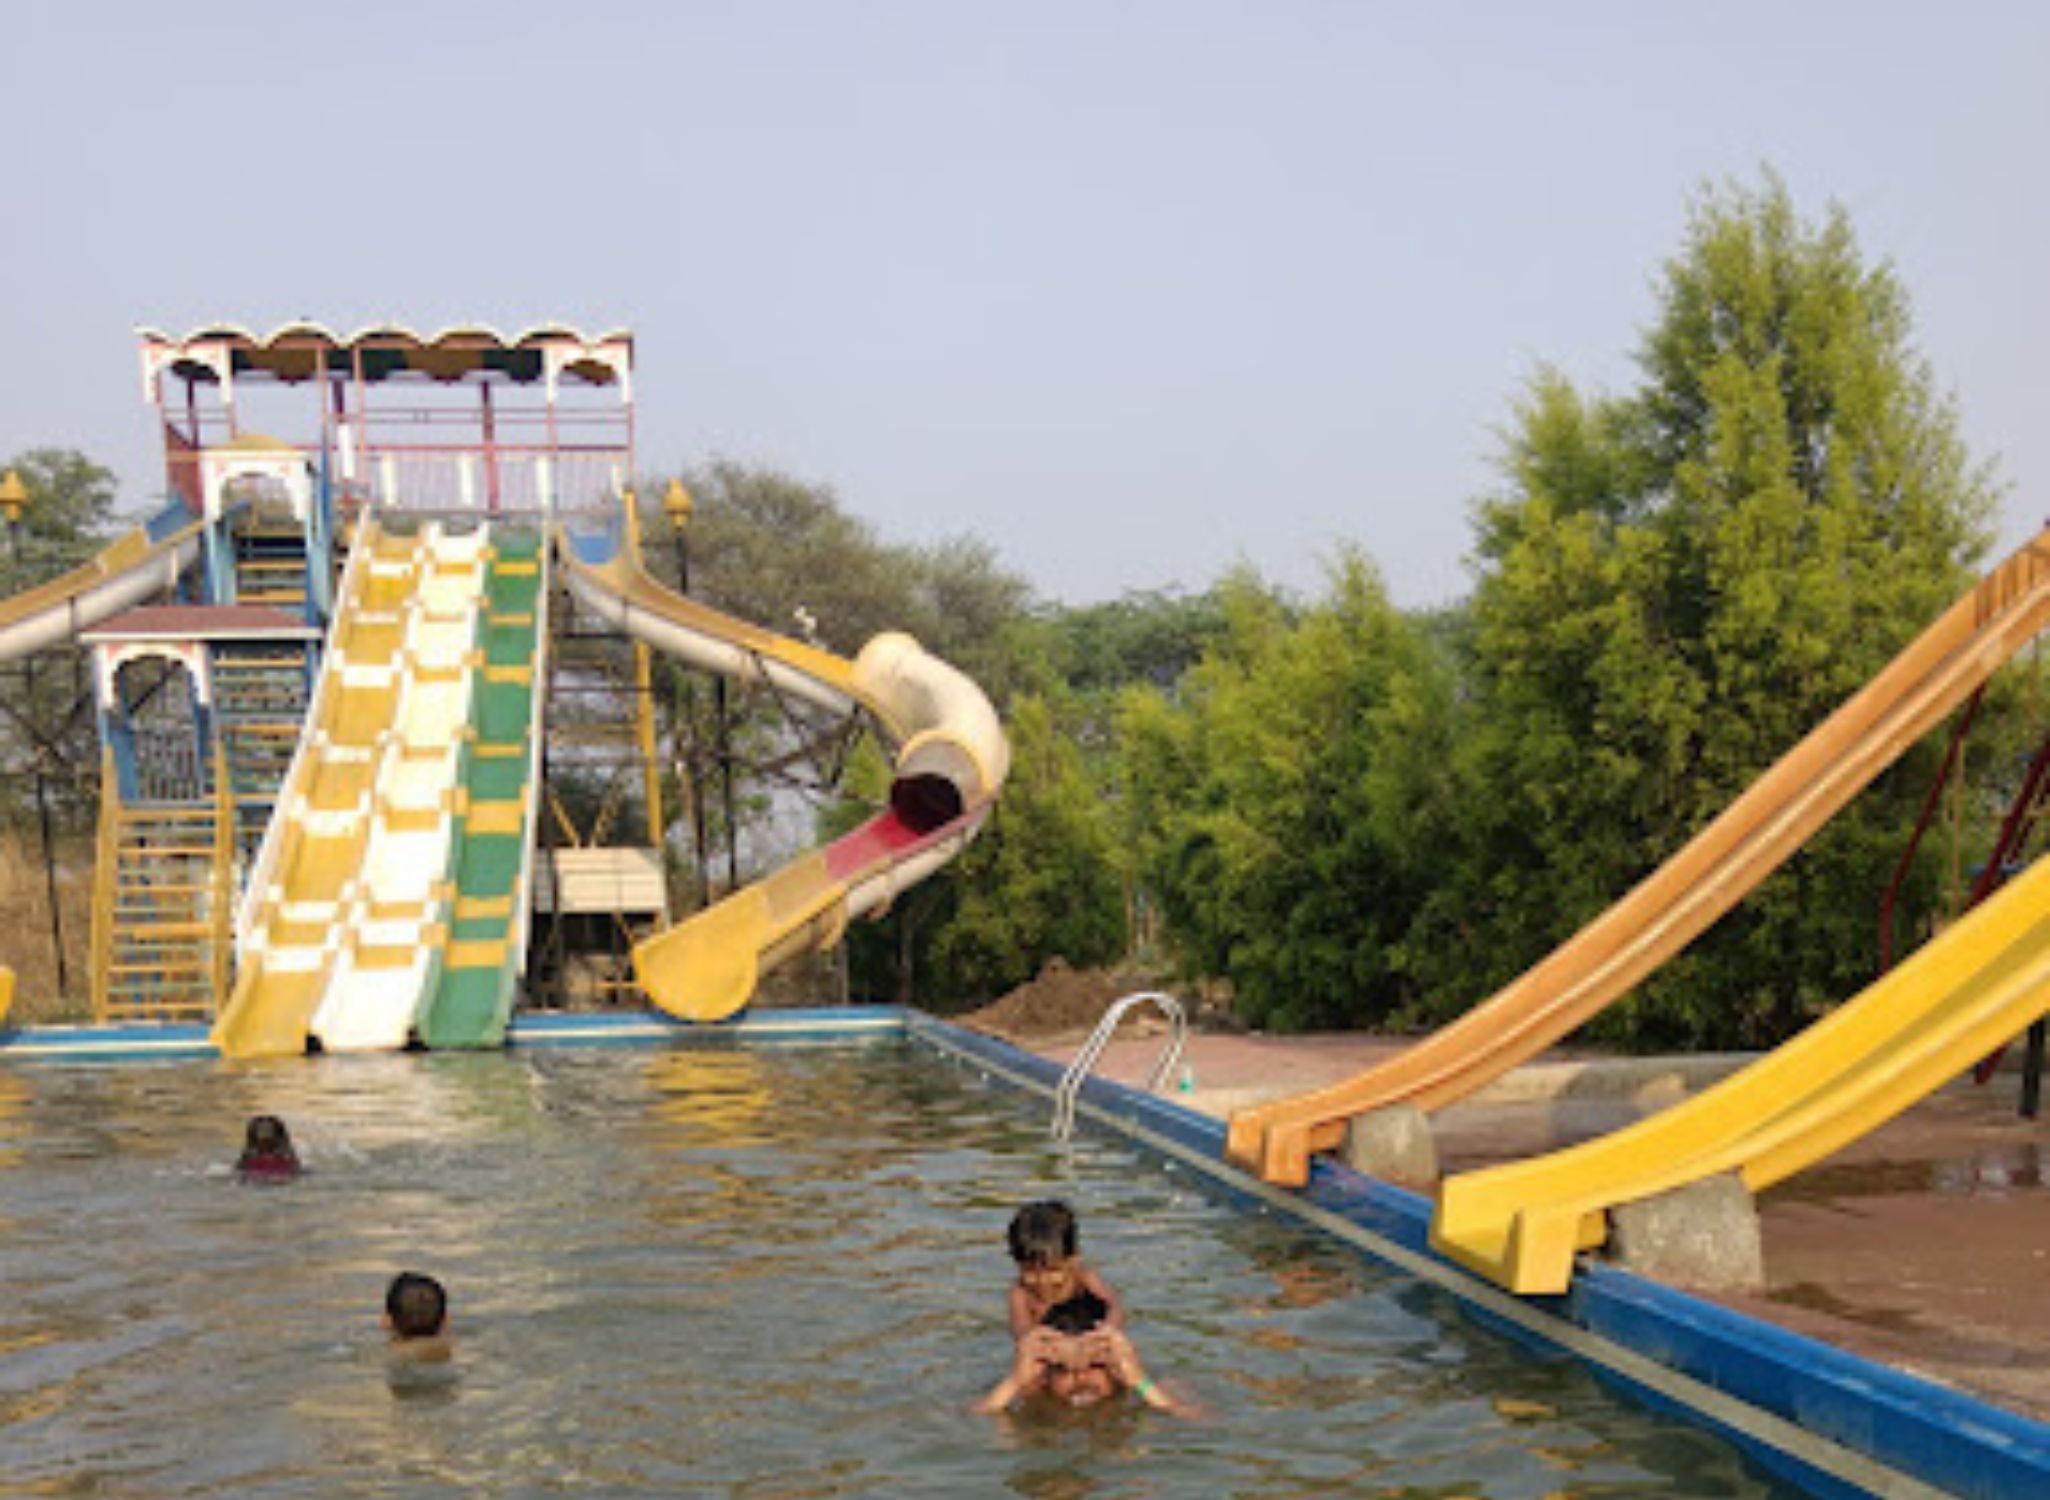 Sangli Water Park & Adventure Park